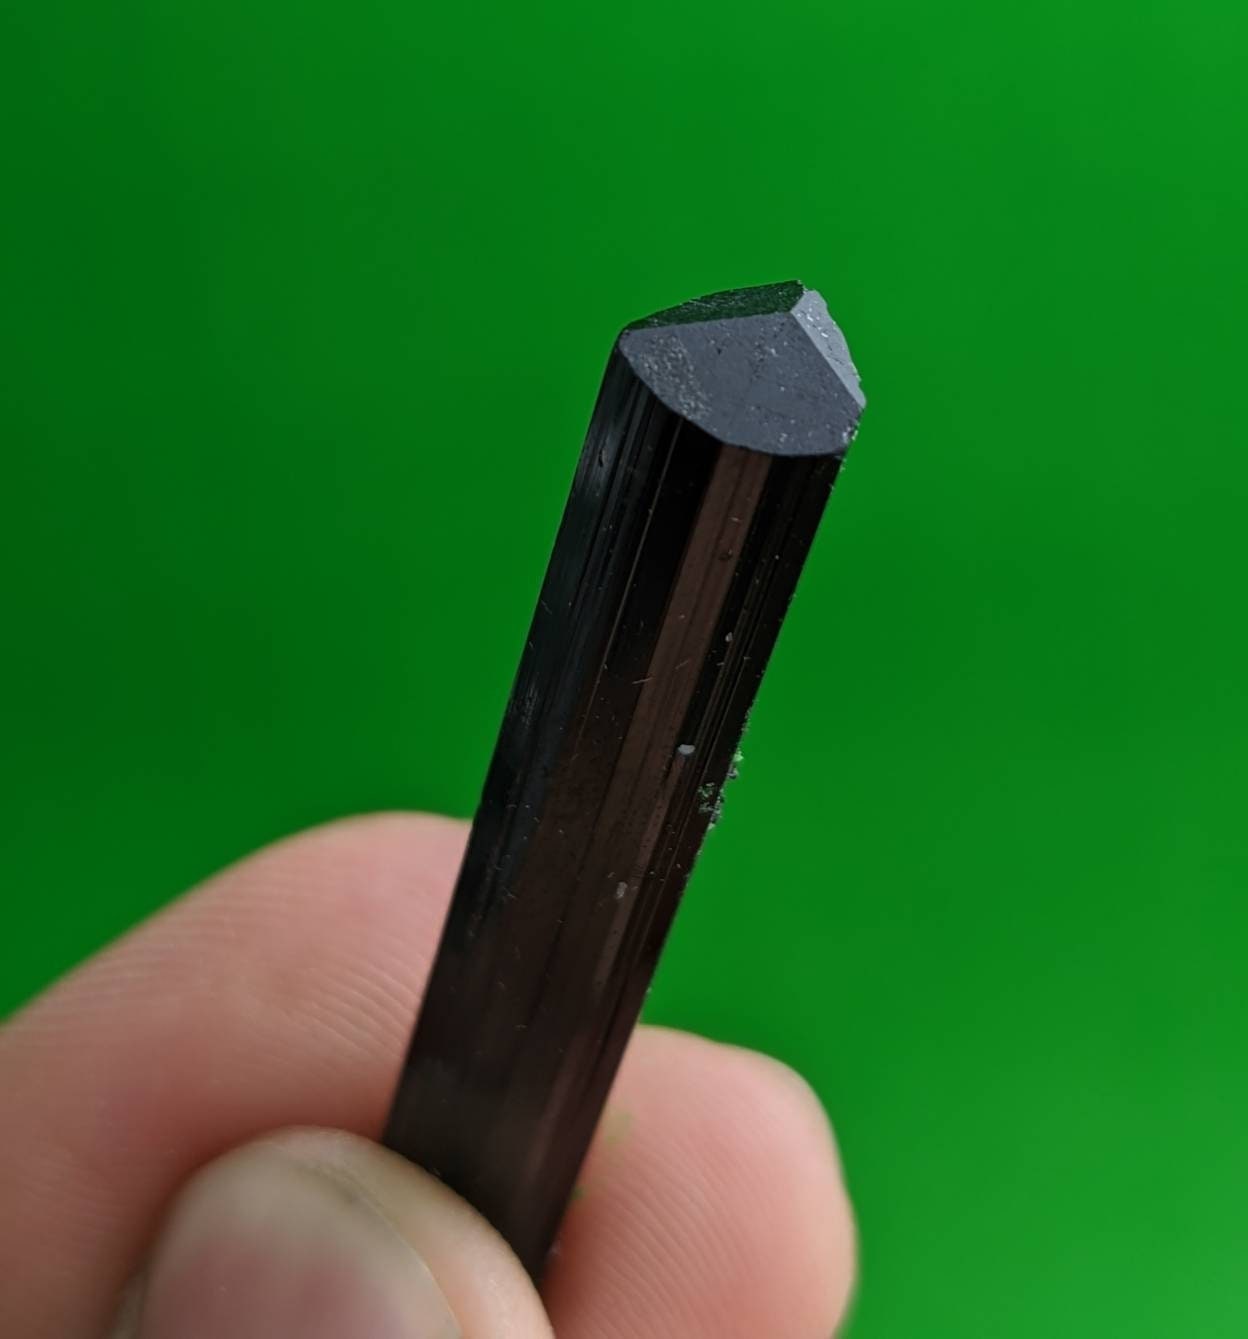 ARSAA GEMS AND MINERALSBlack tourmaline crystal terminated from Skardu GilgitBaltistan Pakistan , weight: 5.1 gram , length 4.7 cm - Premium  from ARSAA GEMS AND MINERALS - Just $25.00! Shop now at ARSAA GEMS AND MINERALS